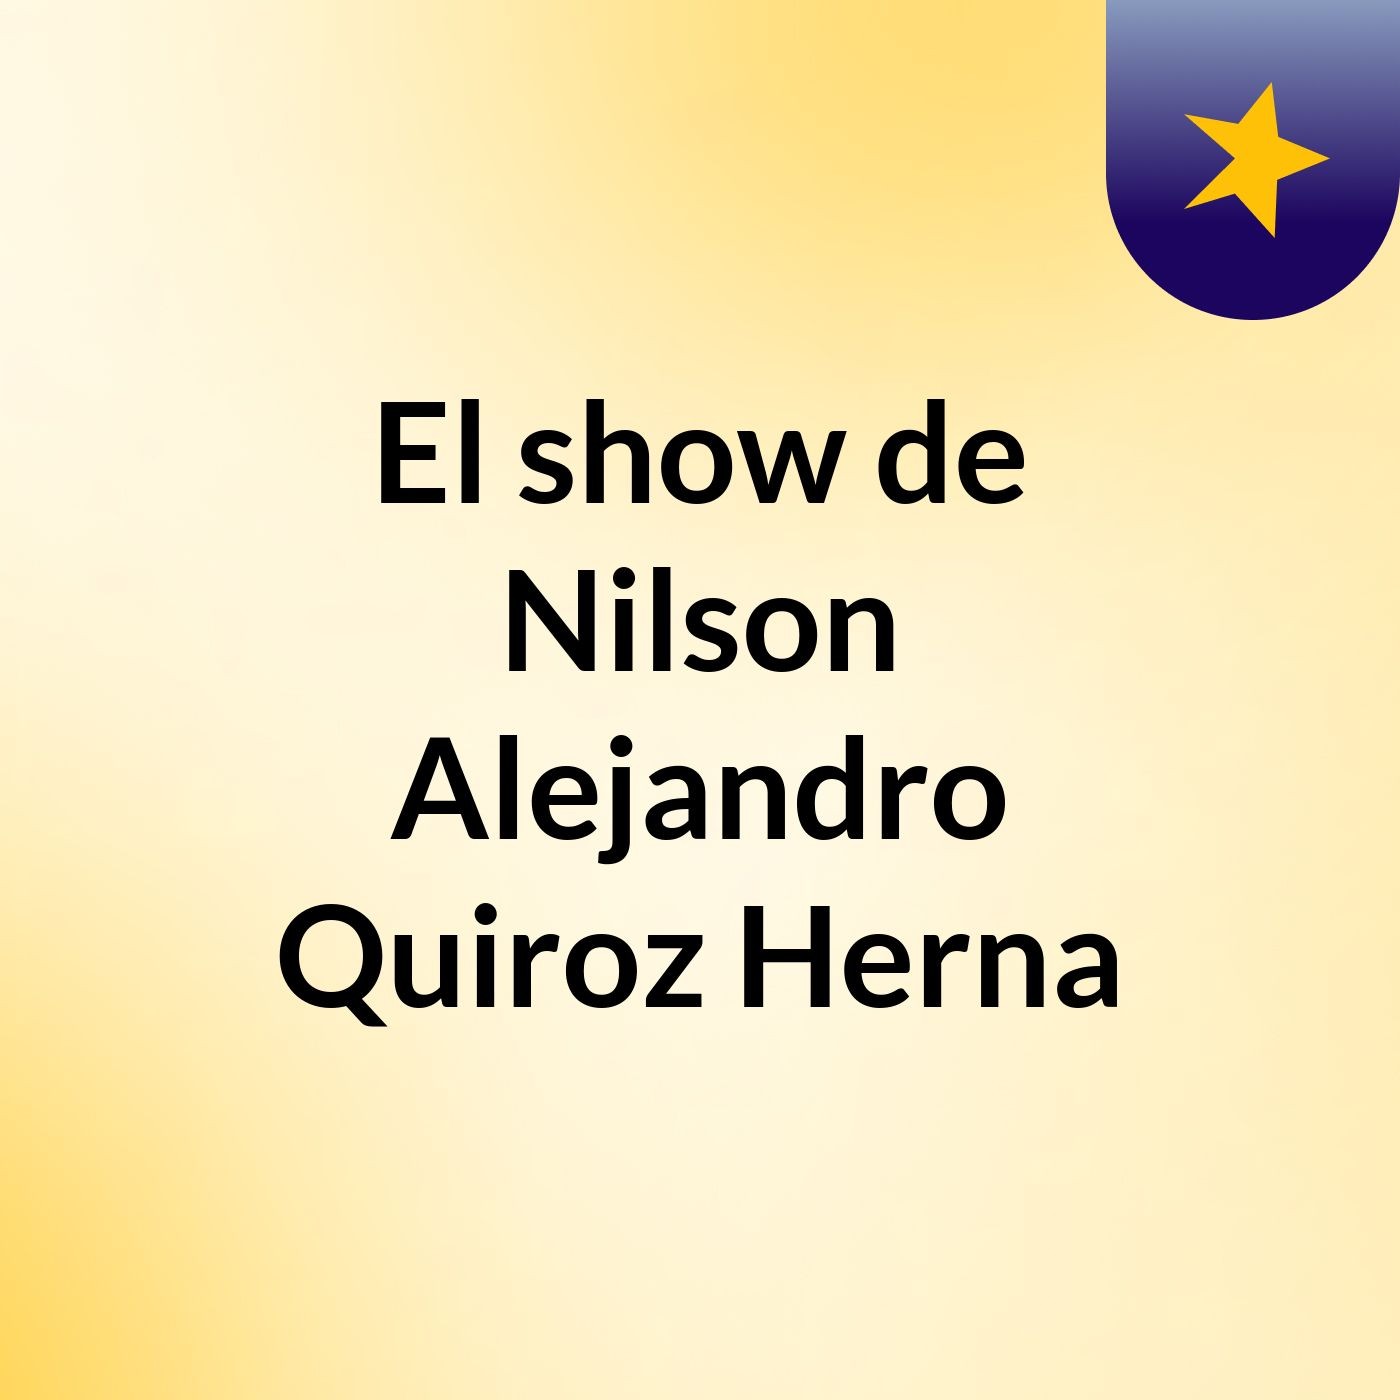 El show de Nilson Alejandro Quiroz Herna